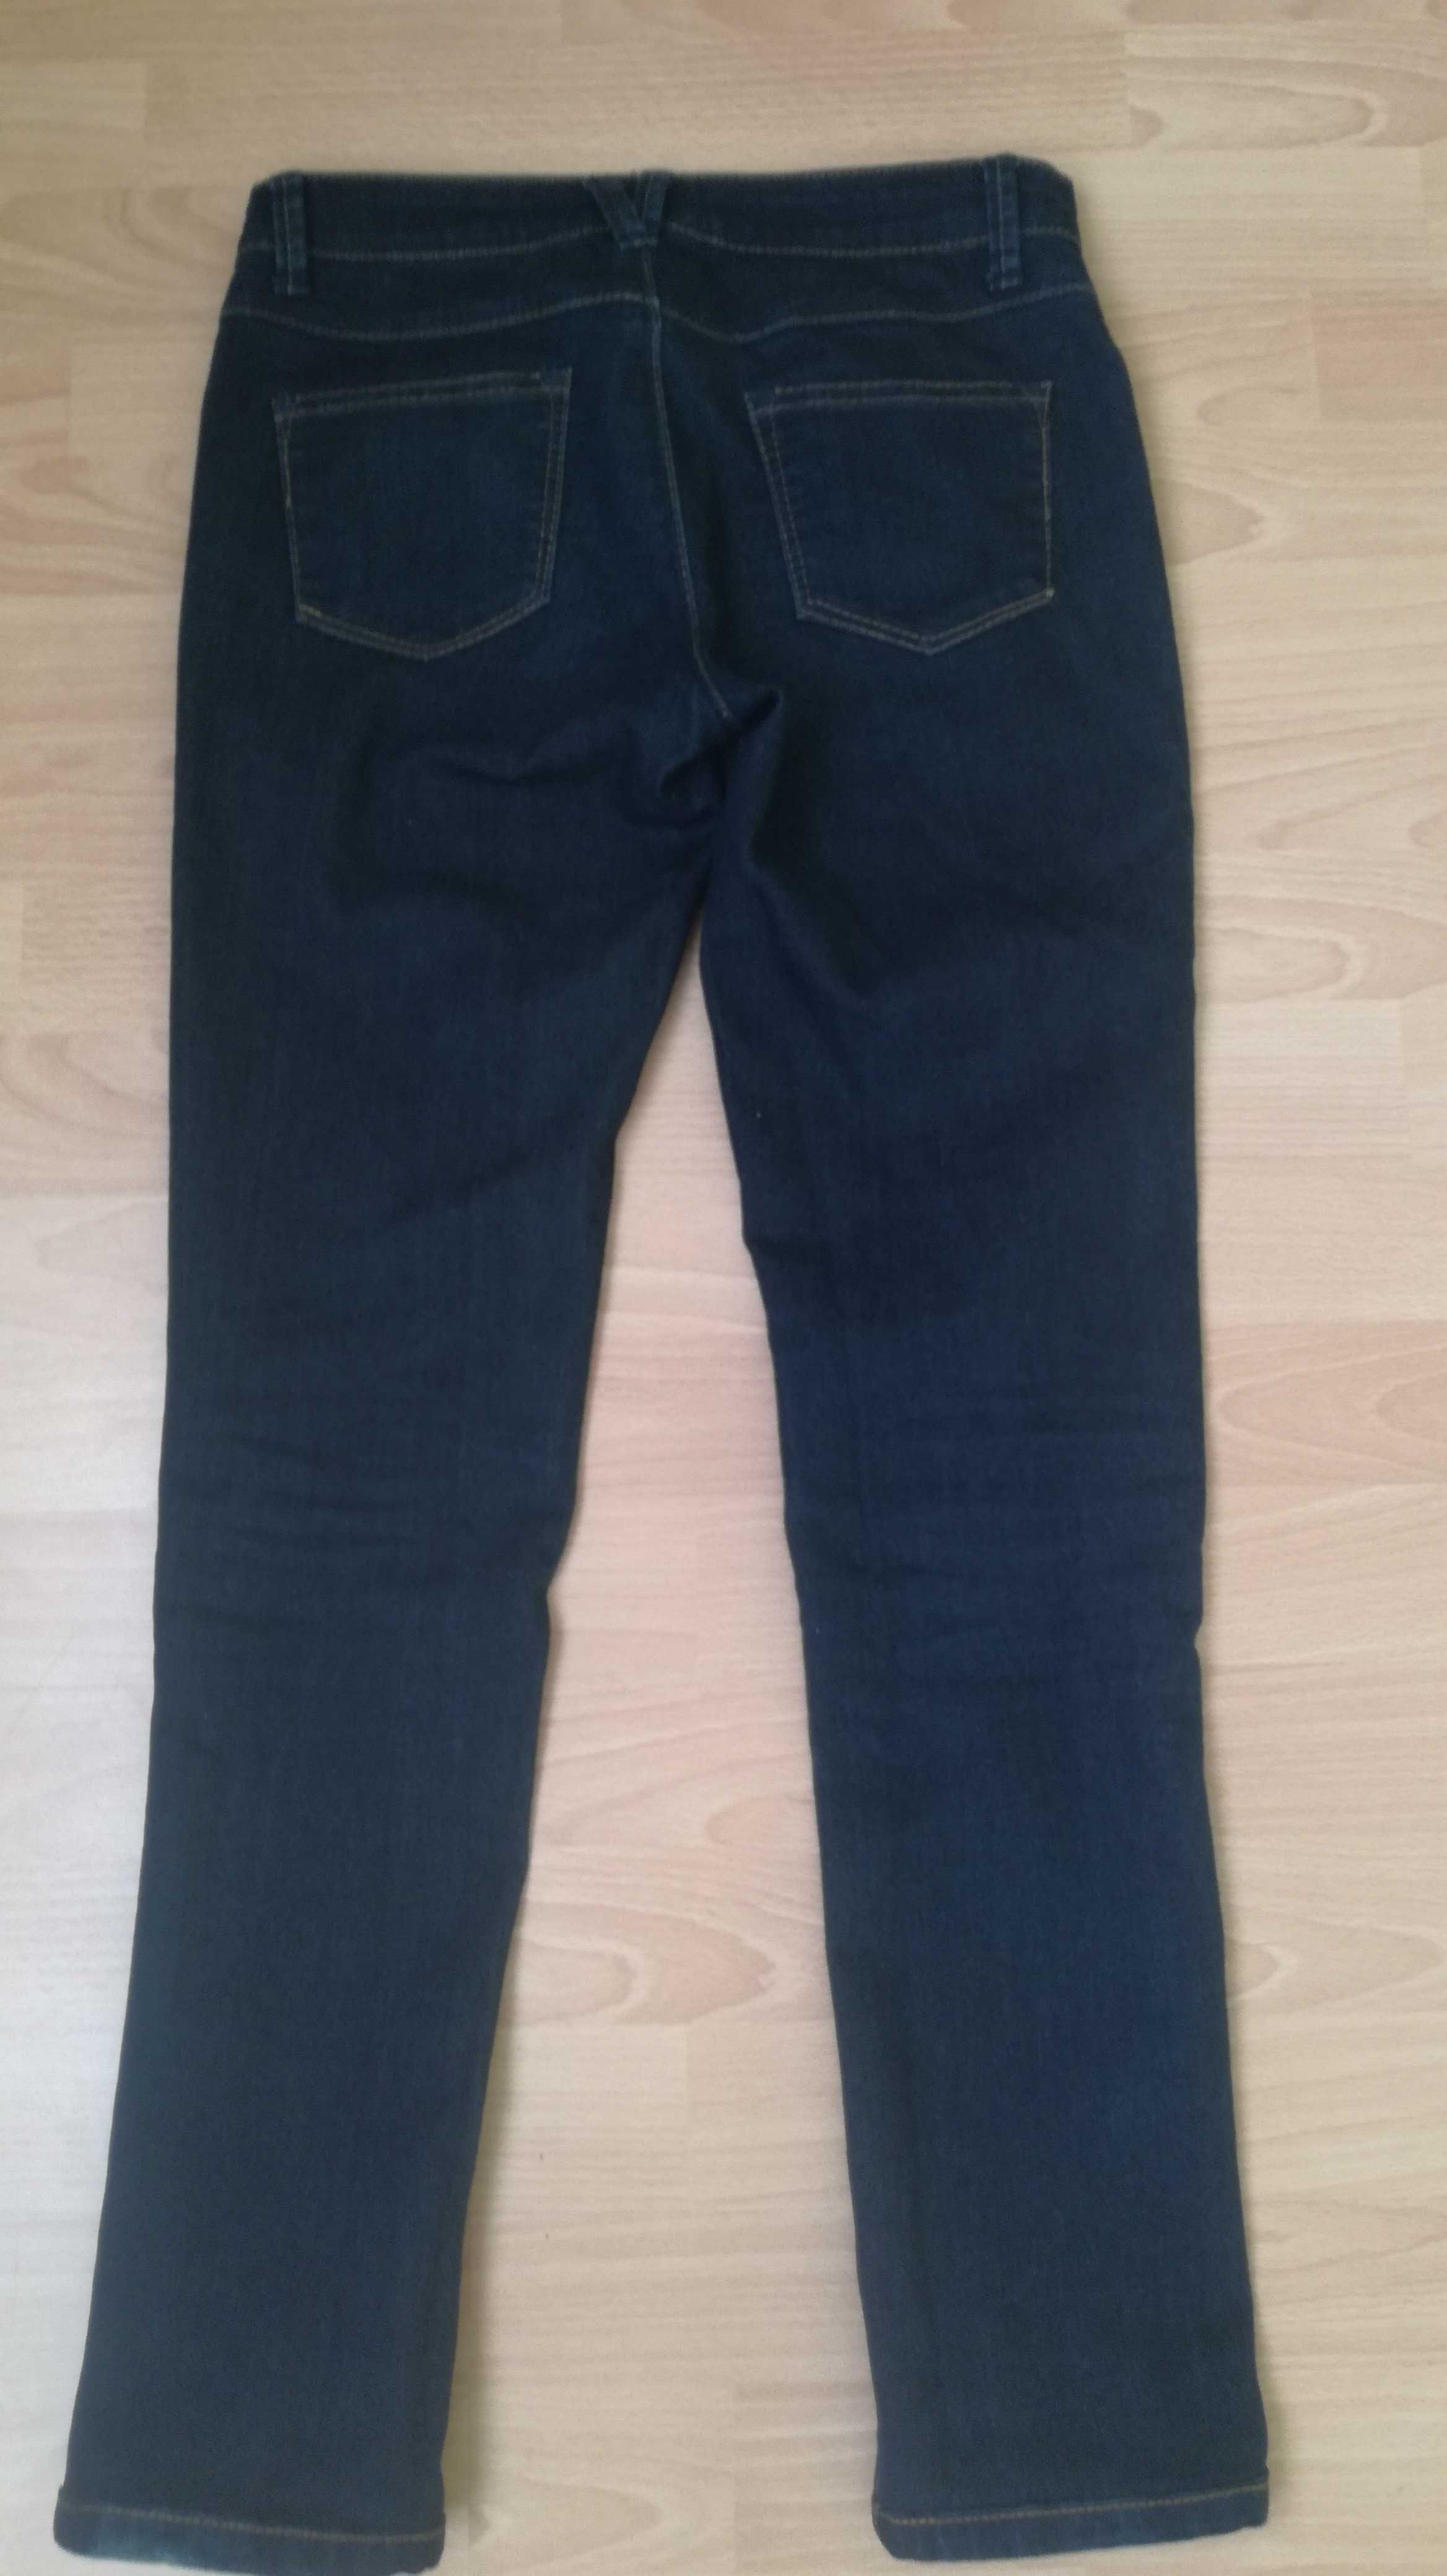 Spodnie jeansy H&M kol. granat XS/34, S/36